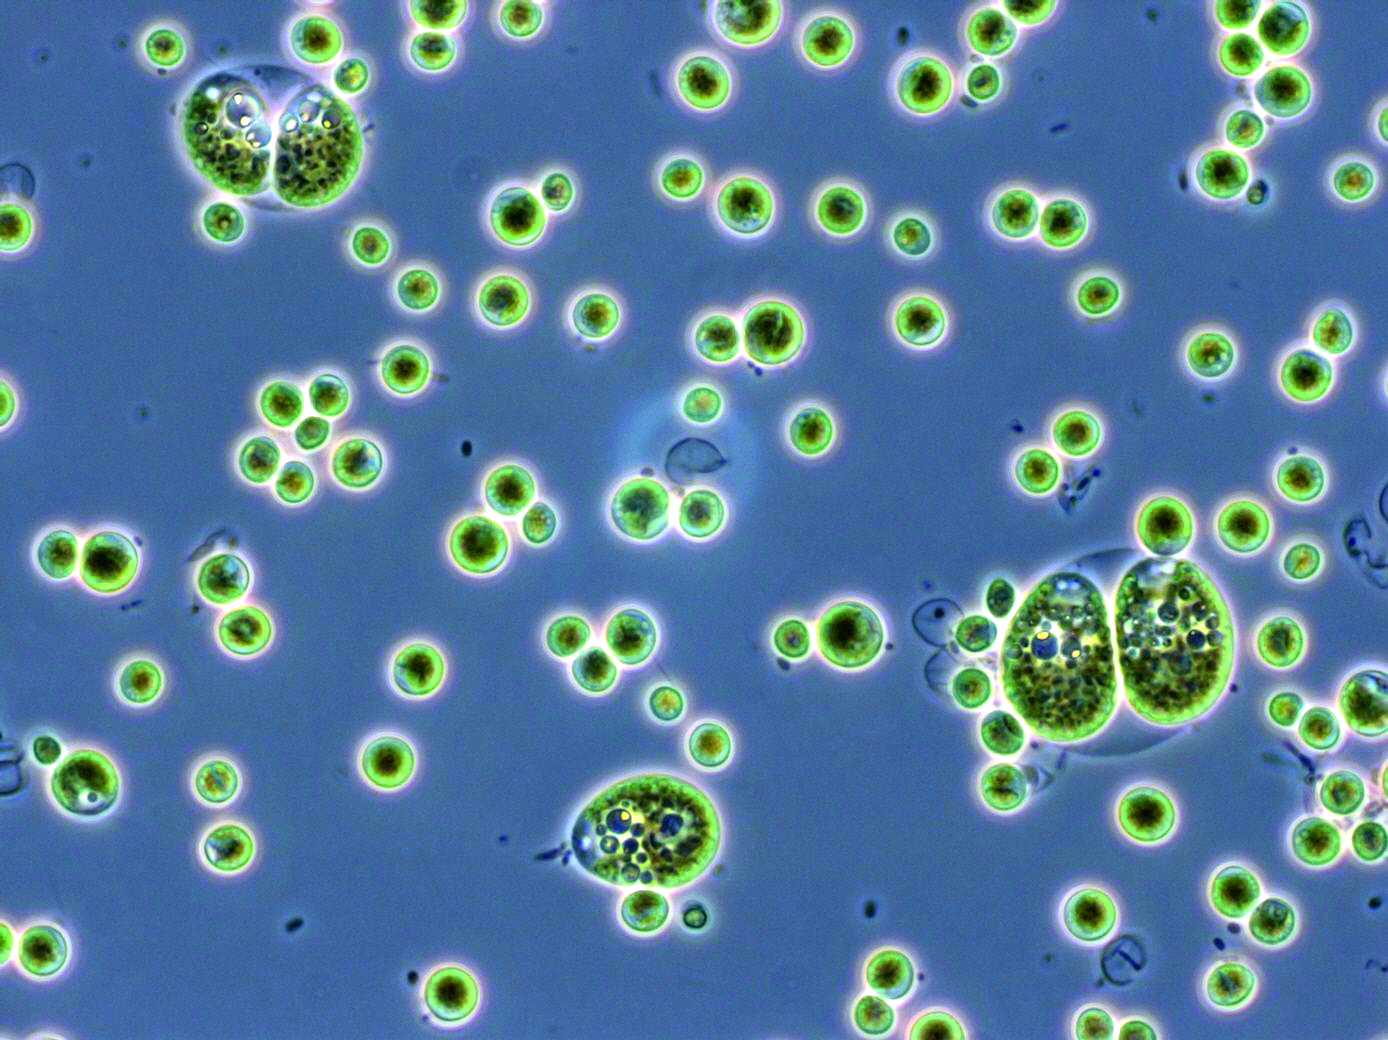 Microscopic image of the microalgae tested